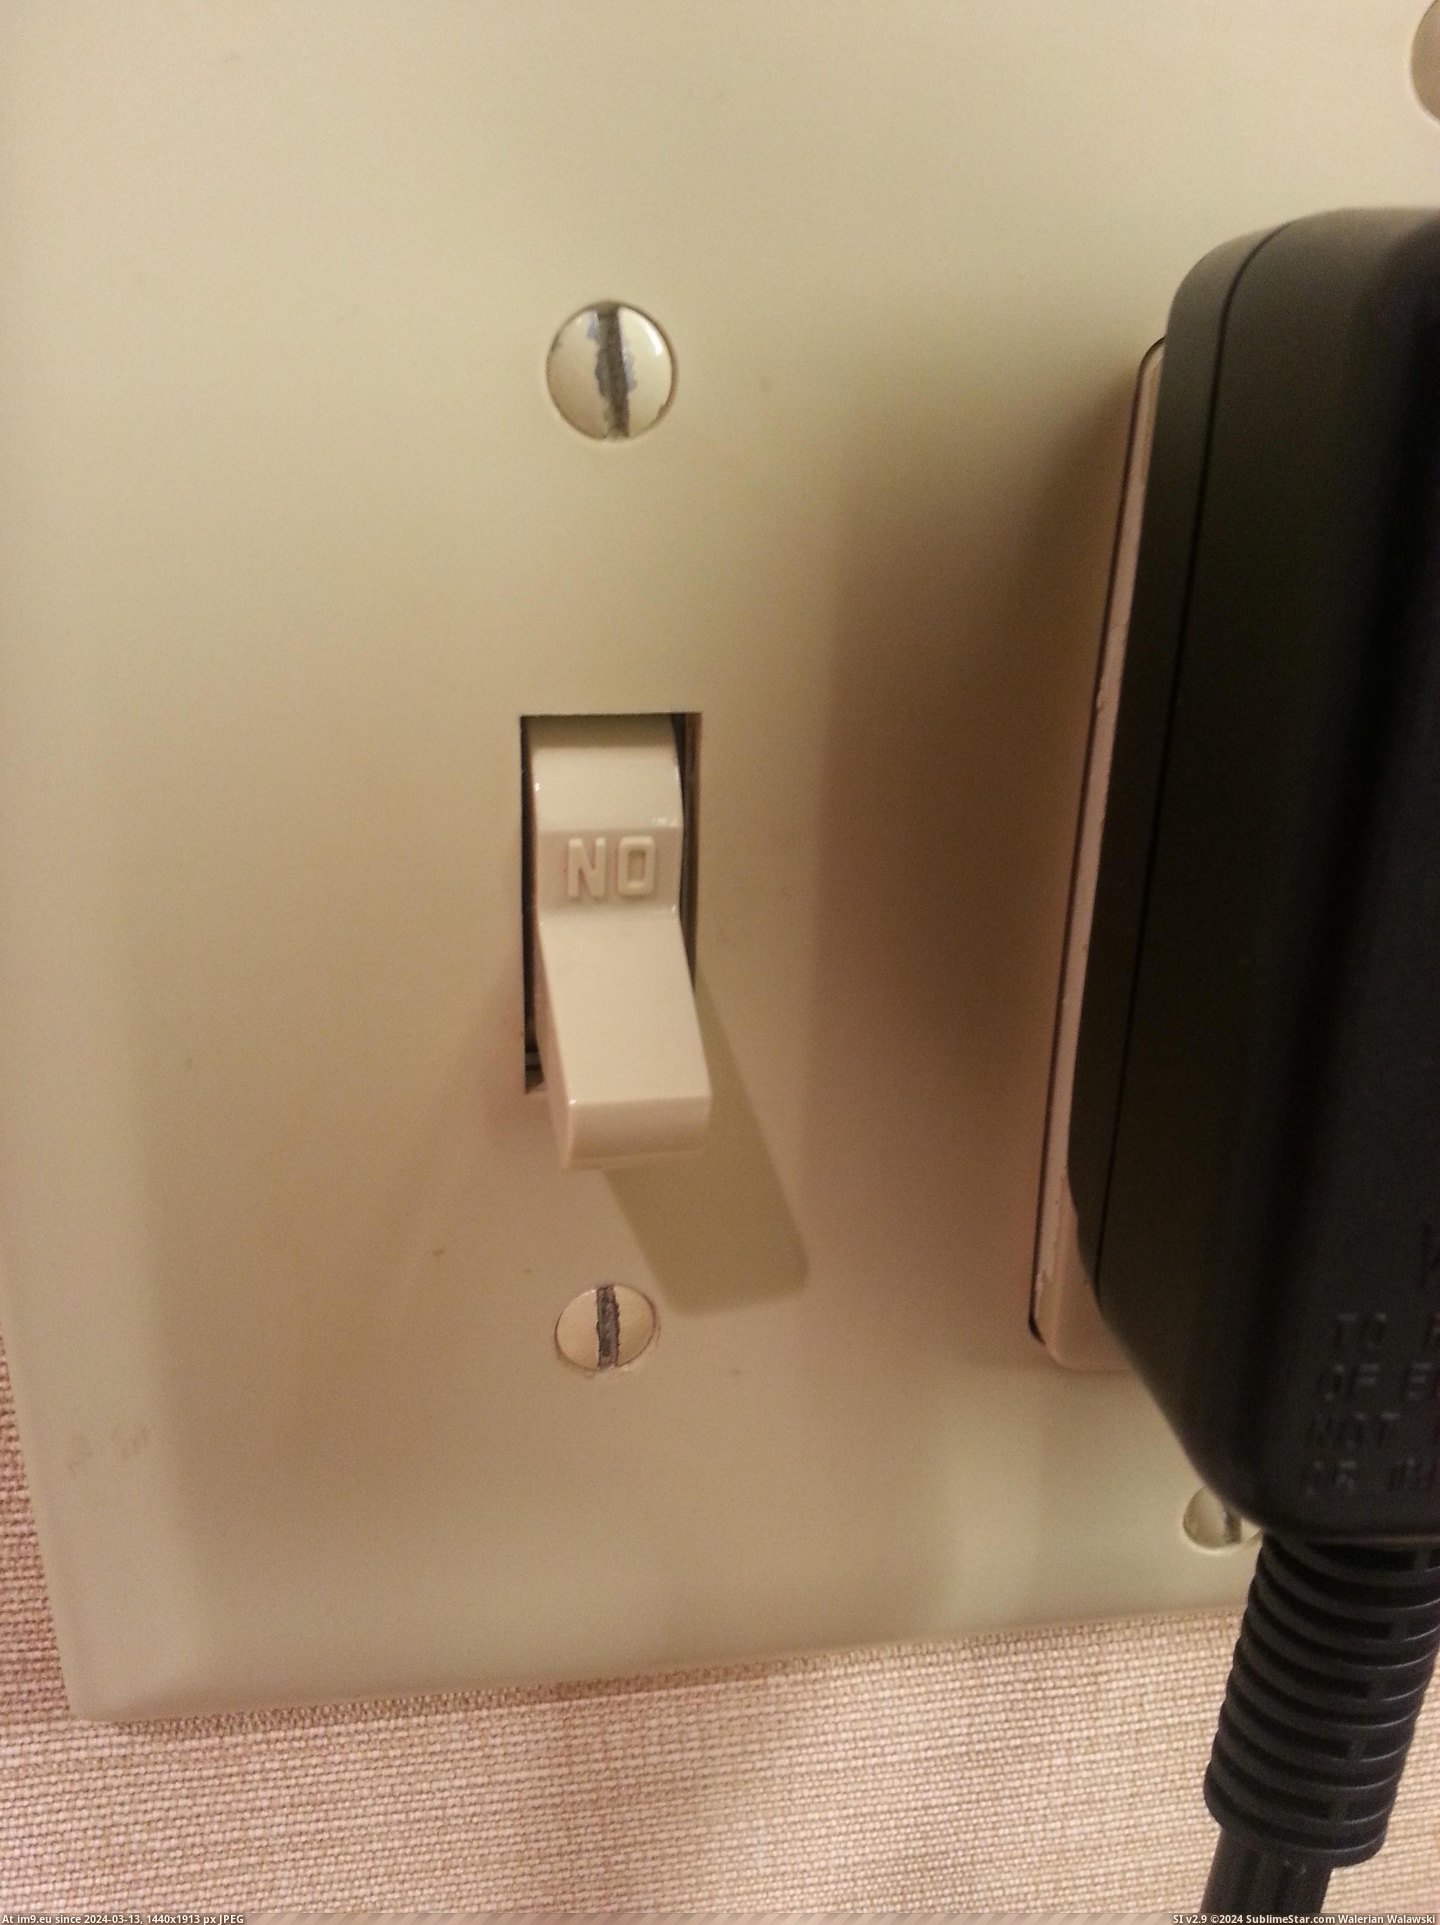 #Hotel #Switch #Upside #Light [Mildlyinteresting] This hotel light switch is upside down. Pic. (Изображение из альбом My r/MILDLYINTERESTING favs))